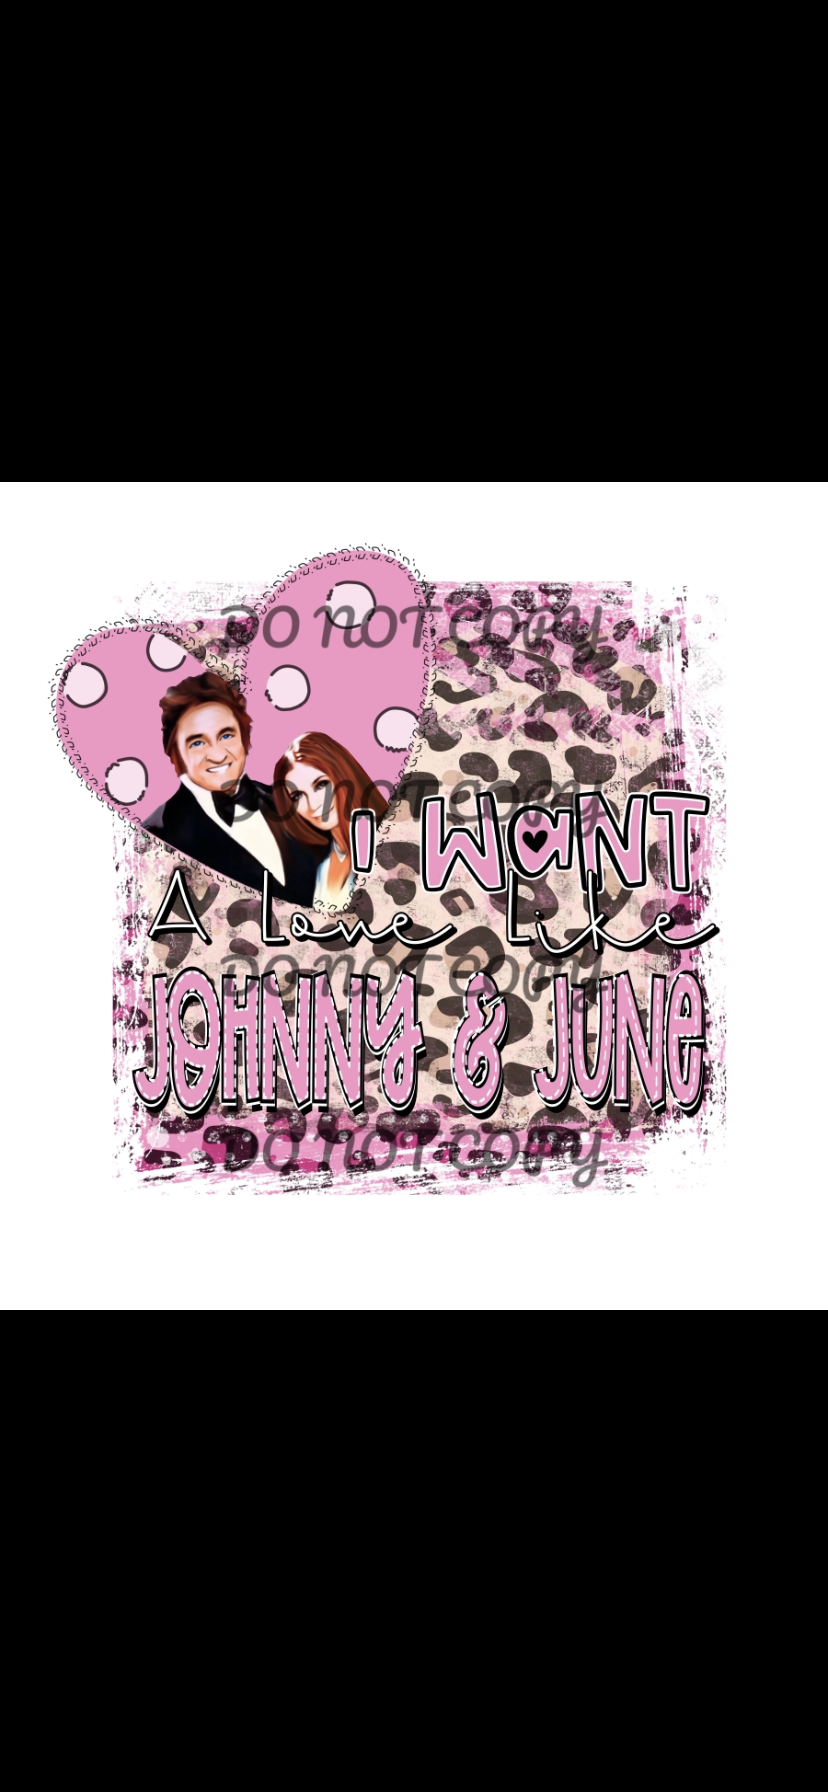 I Want A Love Like Johnny & June Sublimation Transfer